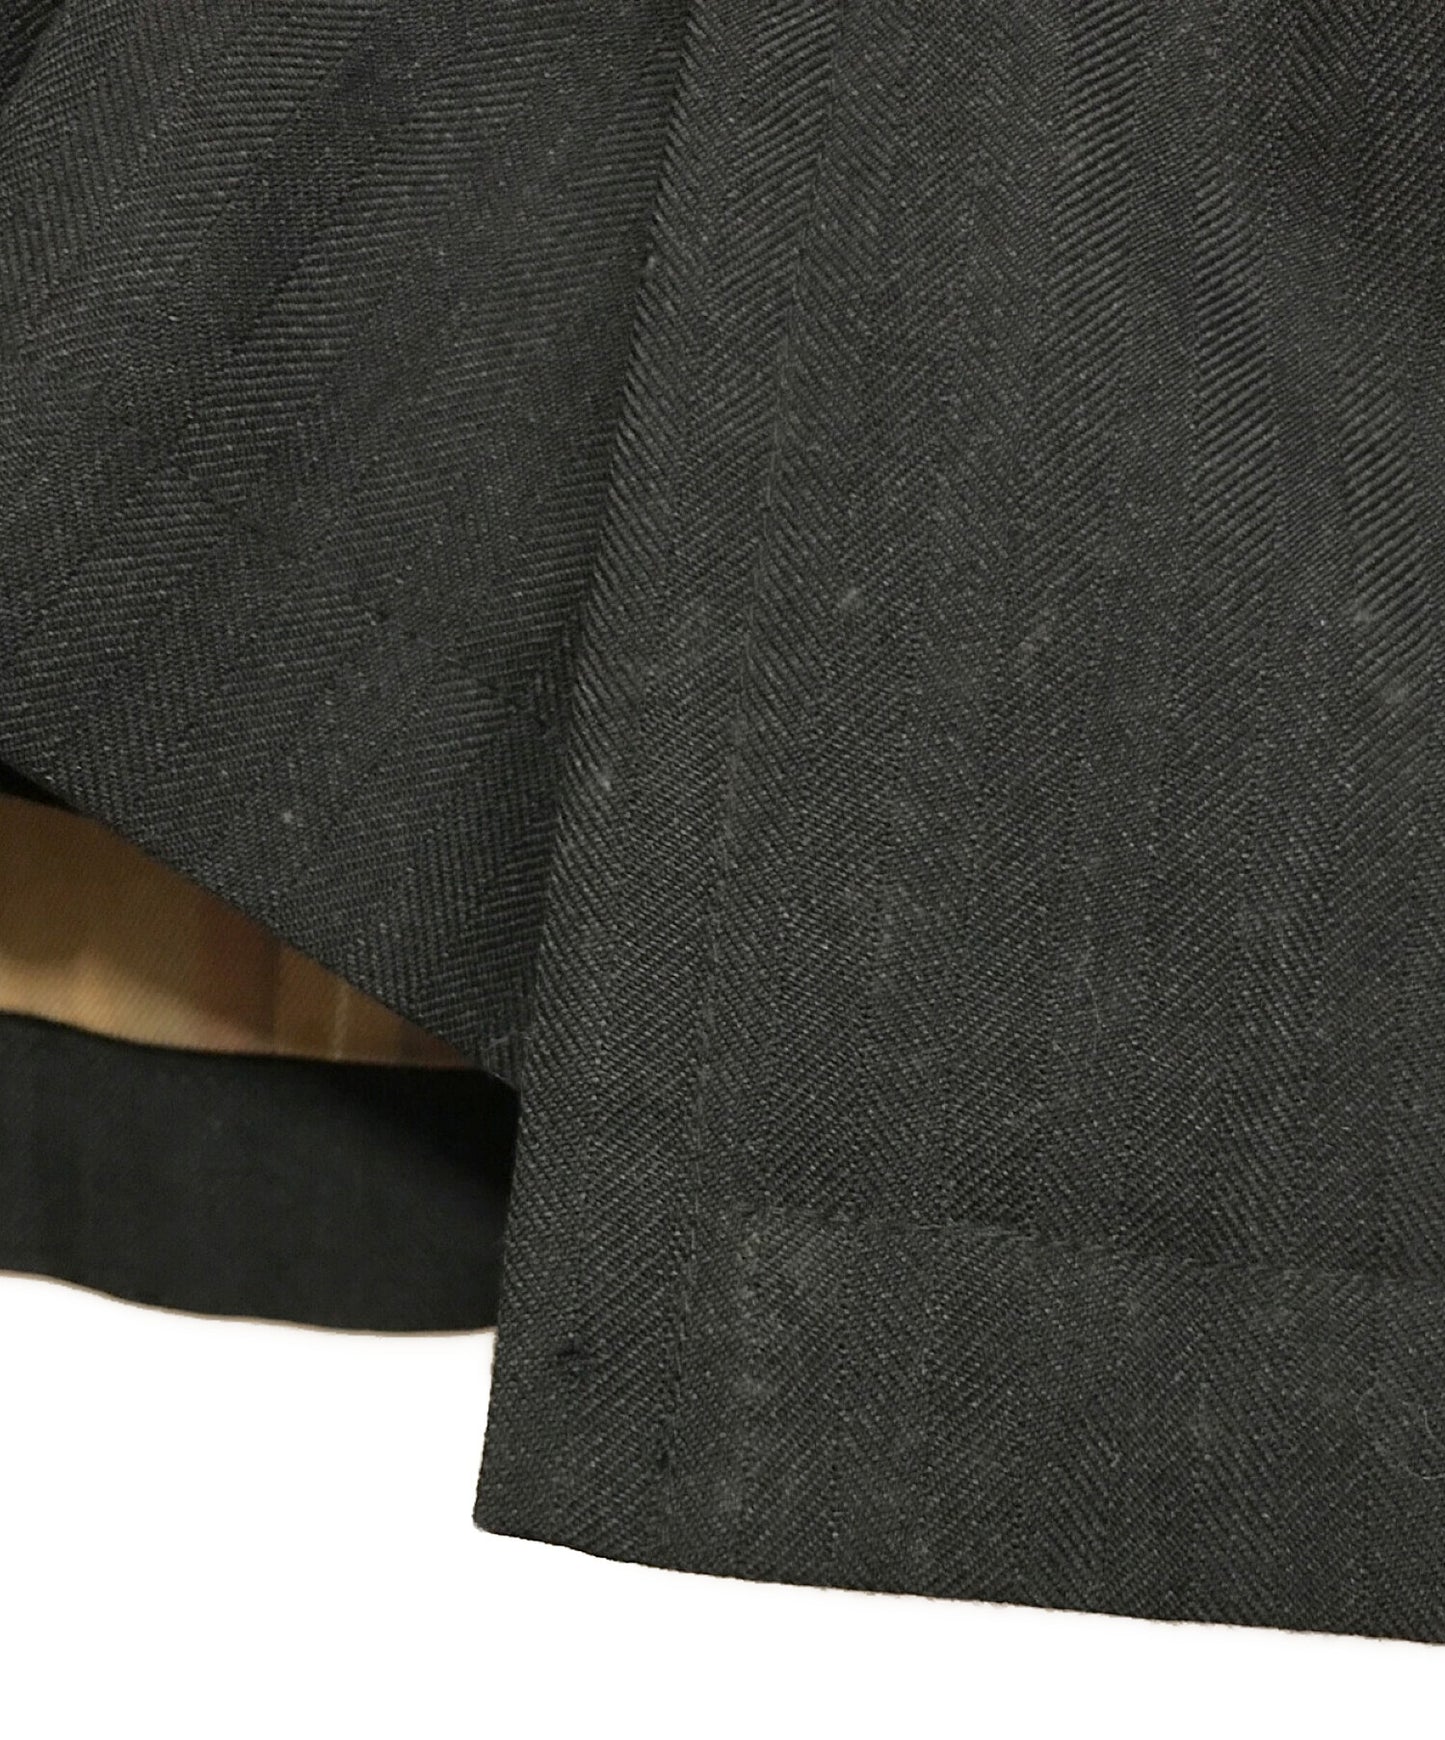 Burberry's Vintage] [Single Sleeve] Tie Locken Coat BBC03-982-08